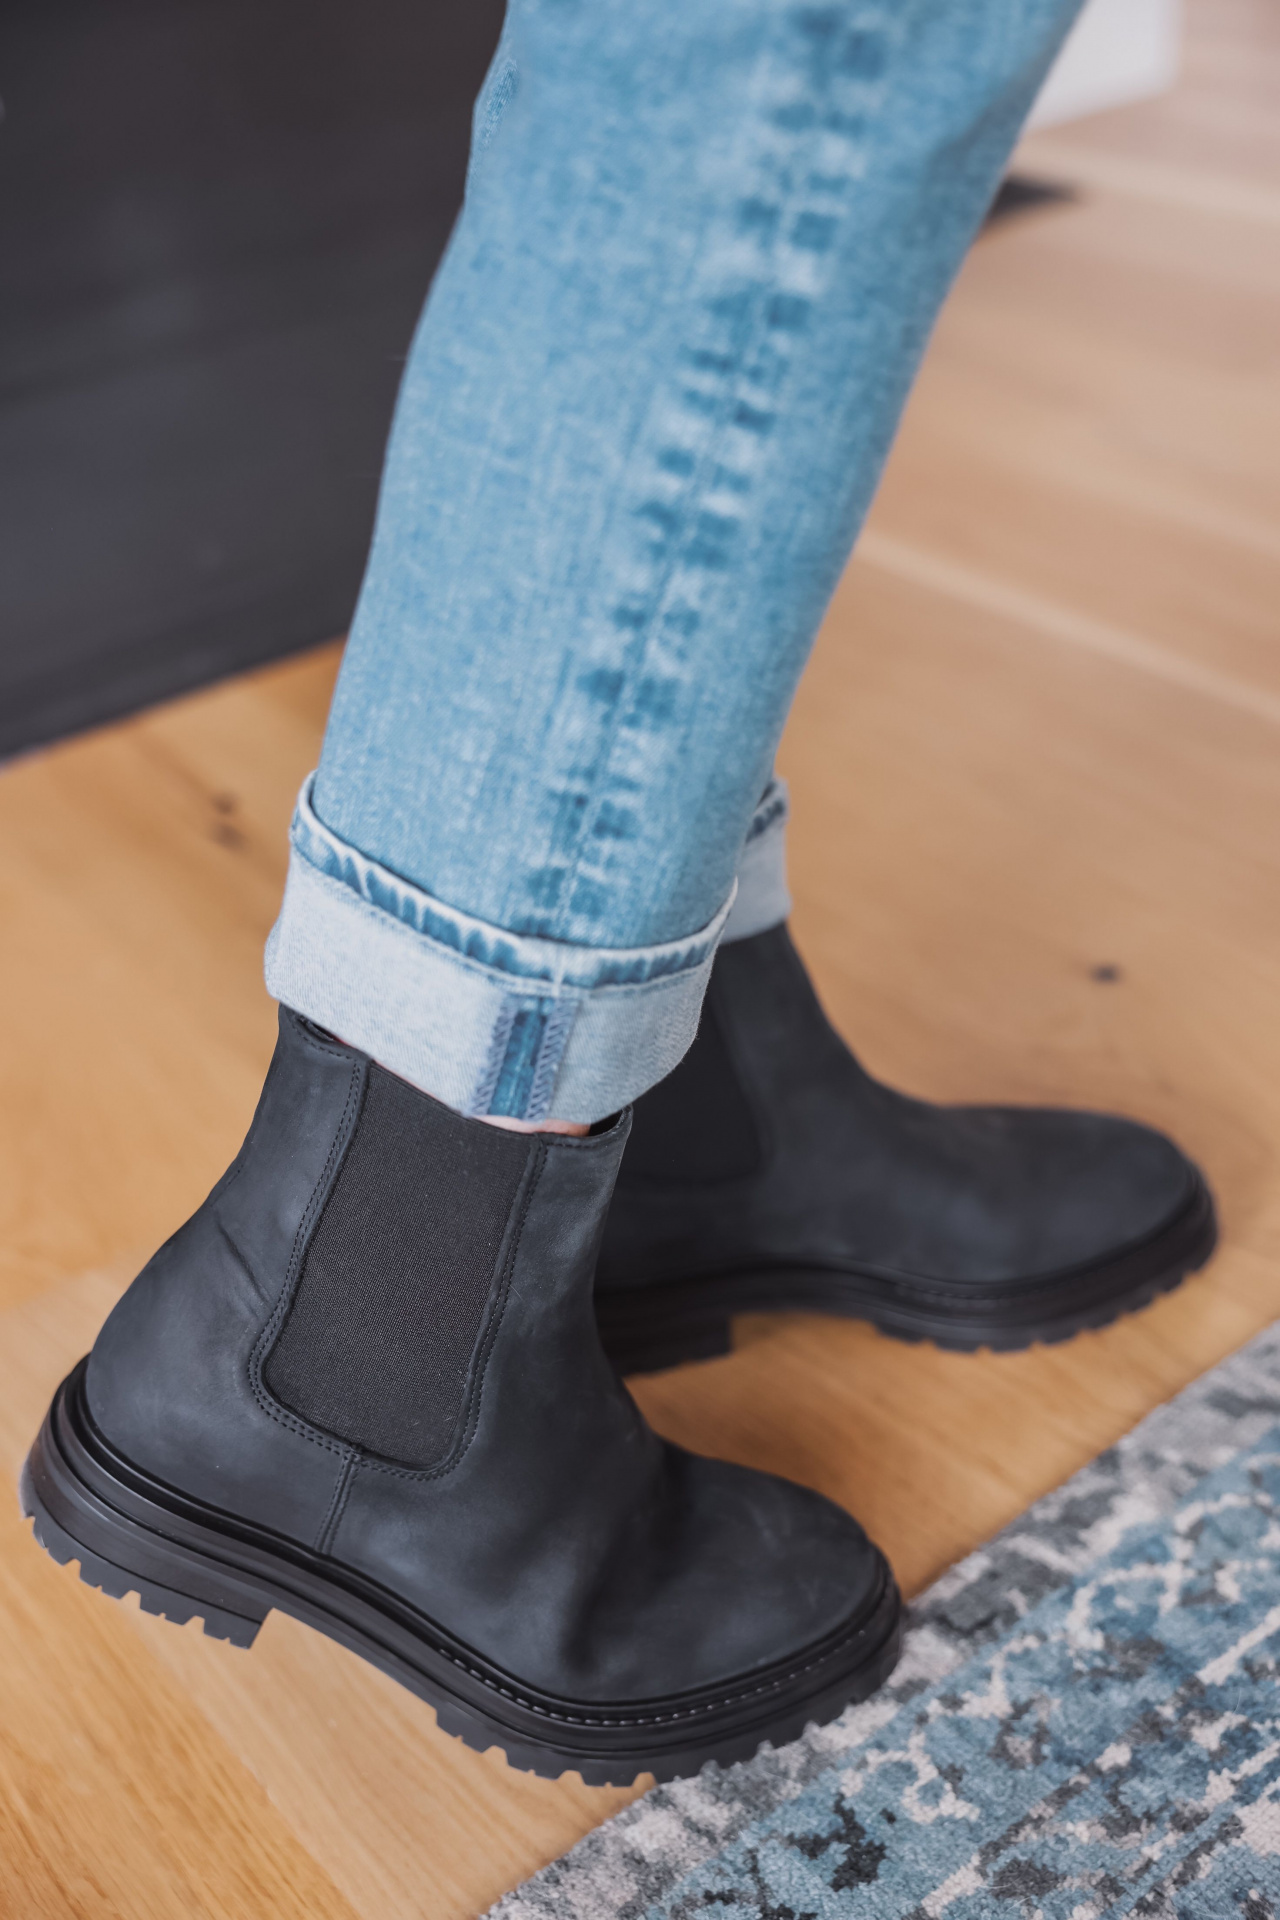 Jenni Kayne Black Booties | Women's Boots and Booties